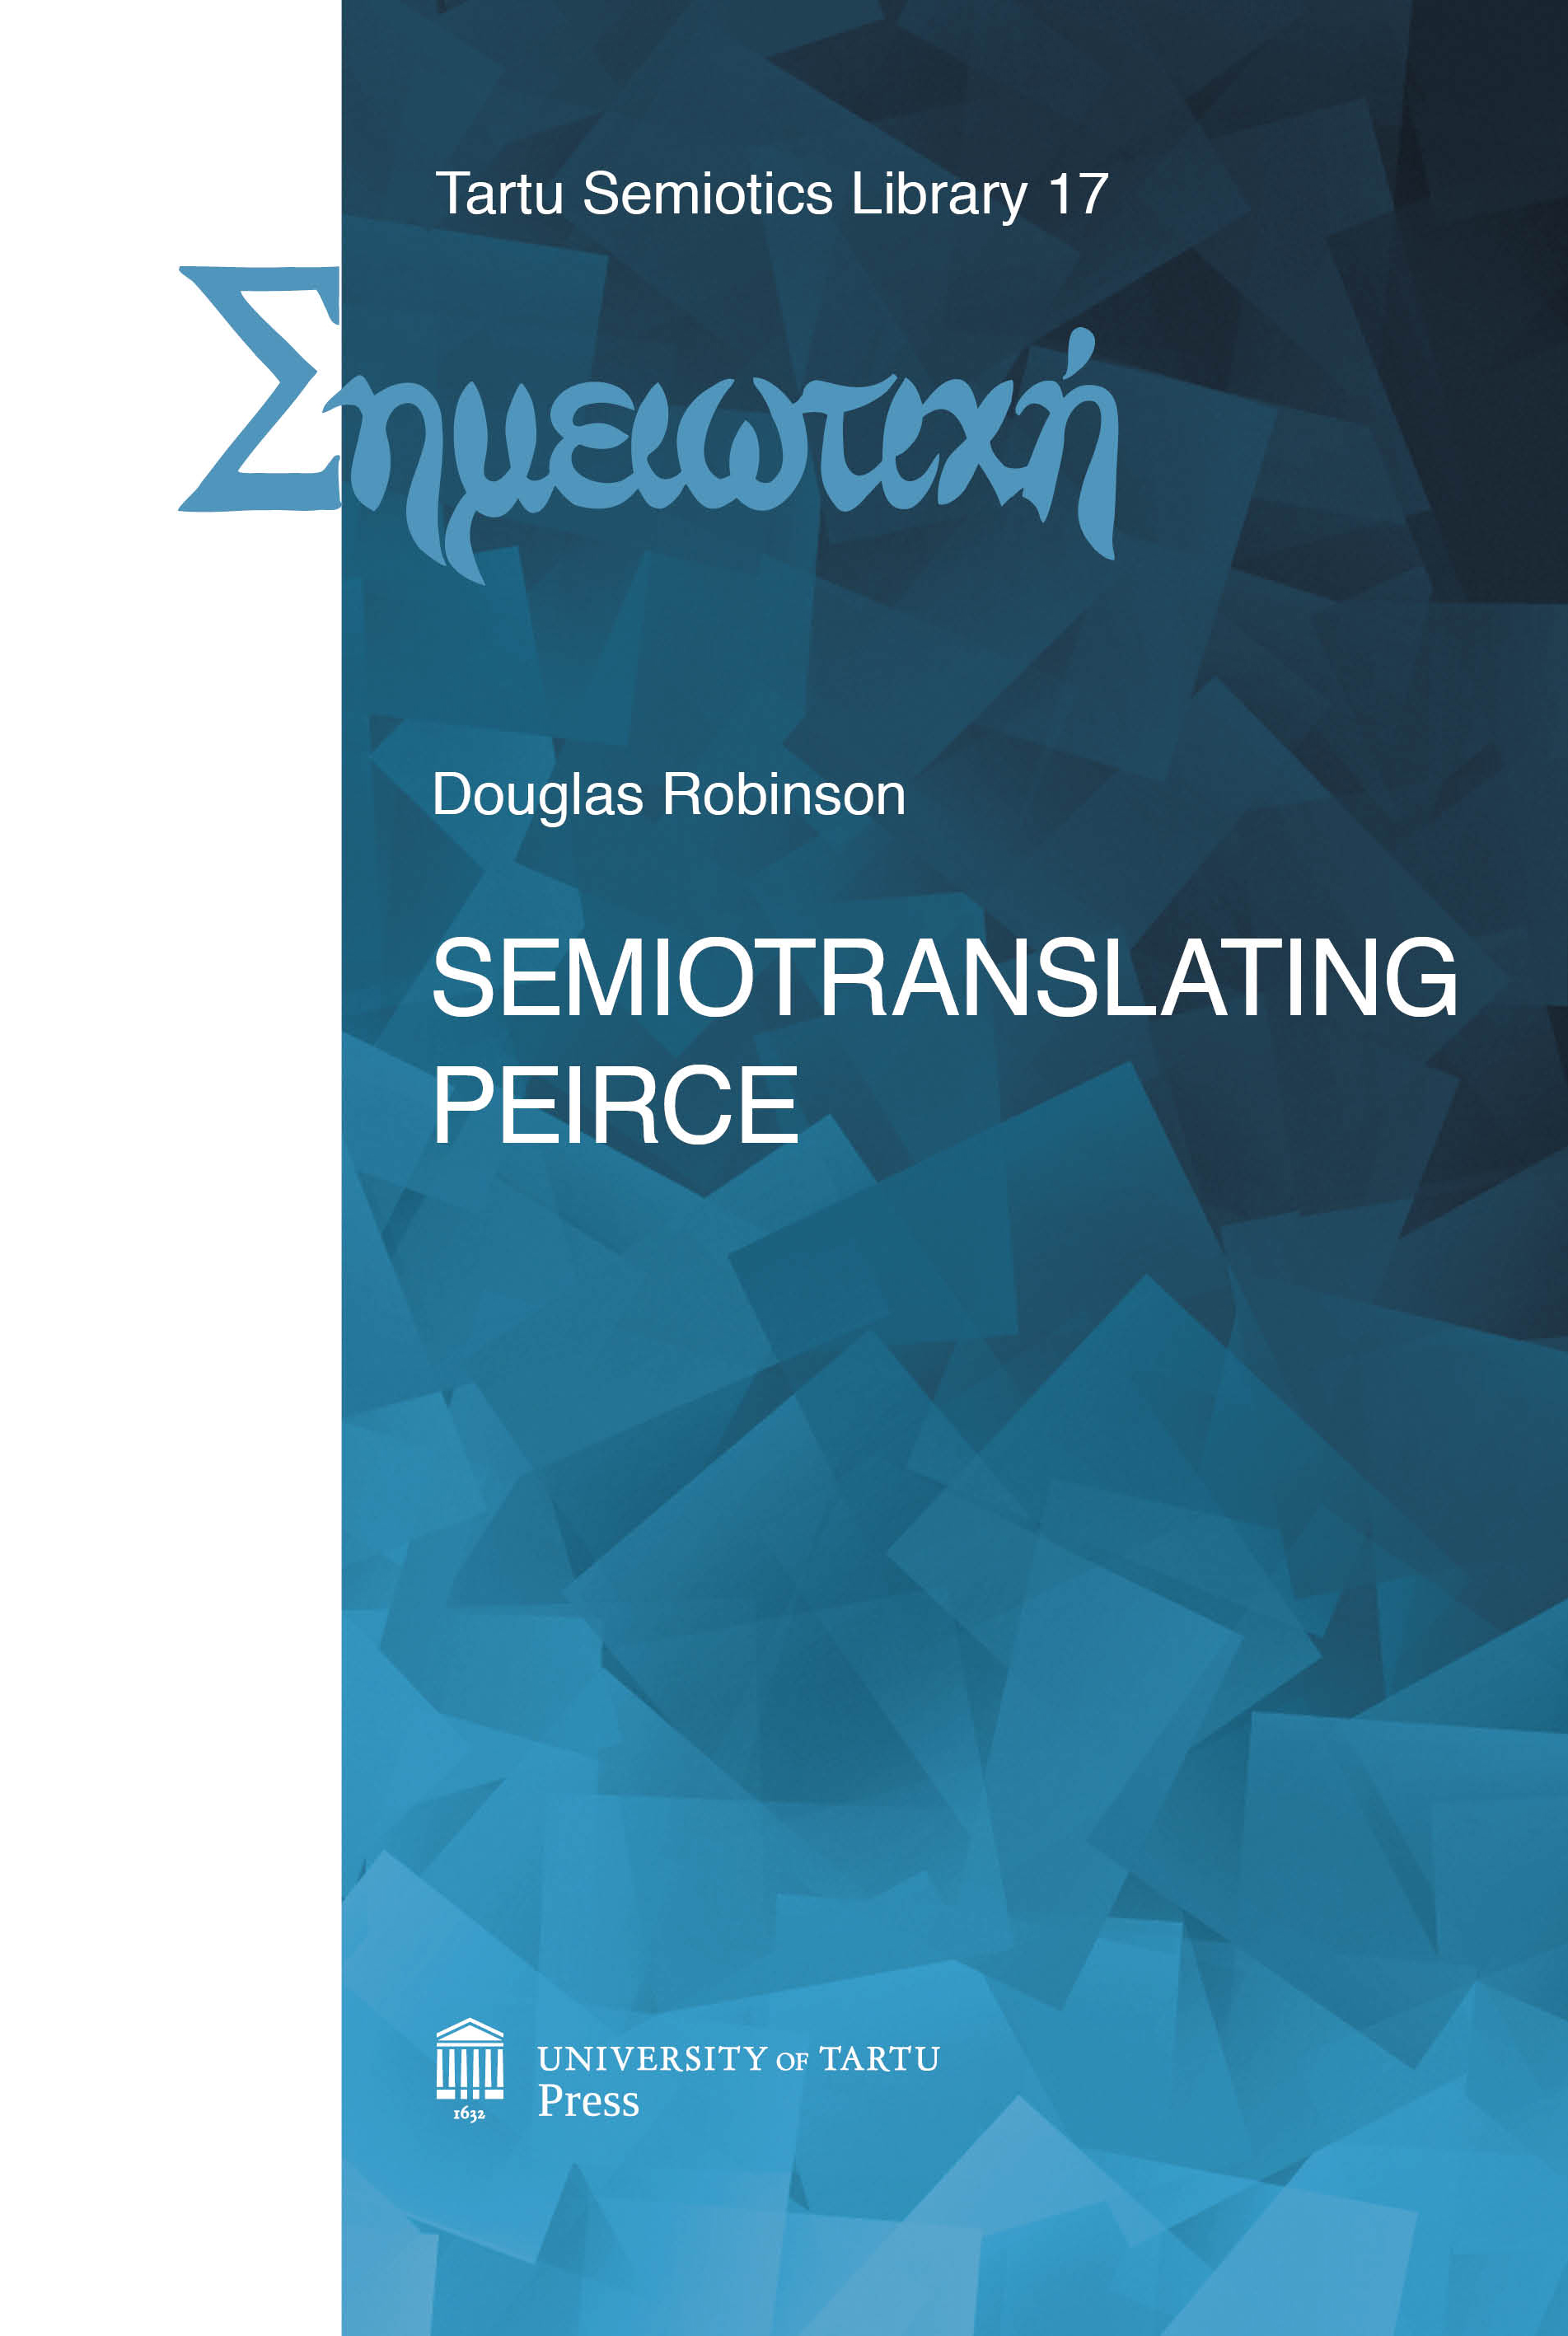 Chapter 2. - Test case 1: Semiotranslating Peirce into Finnish